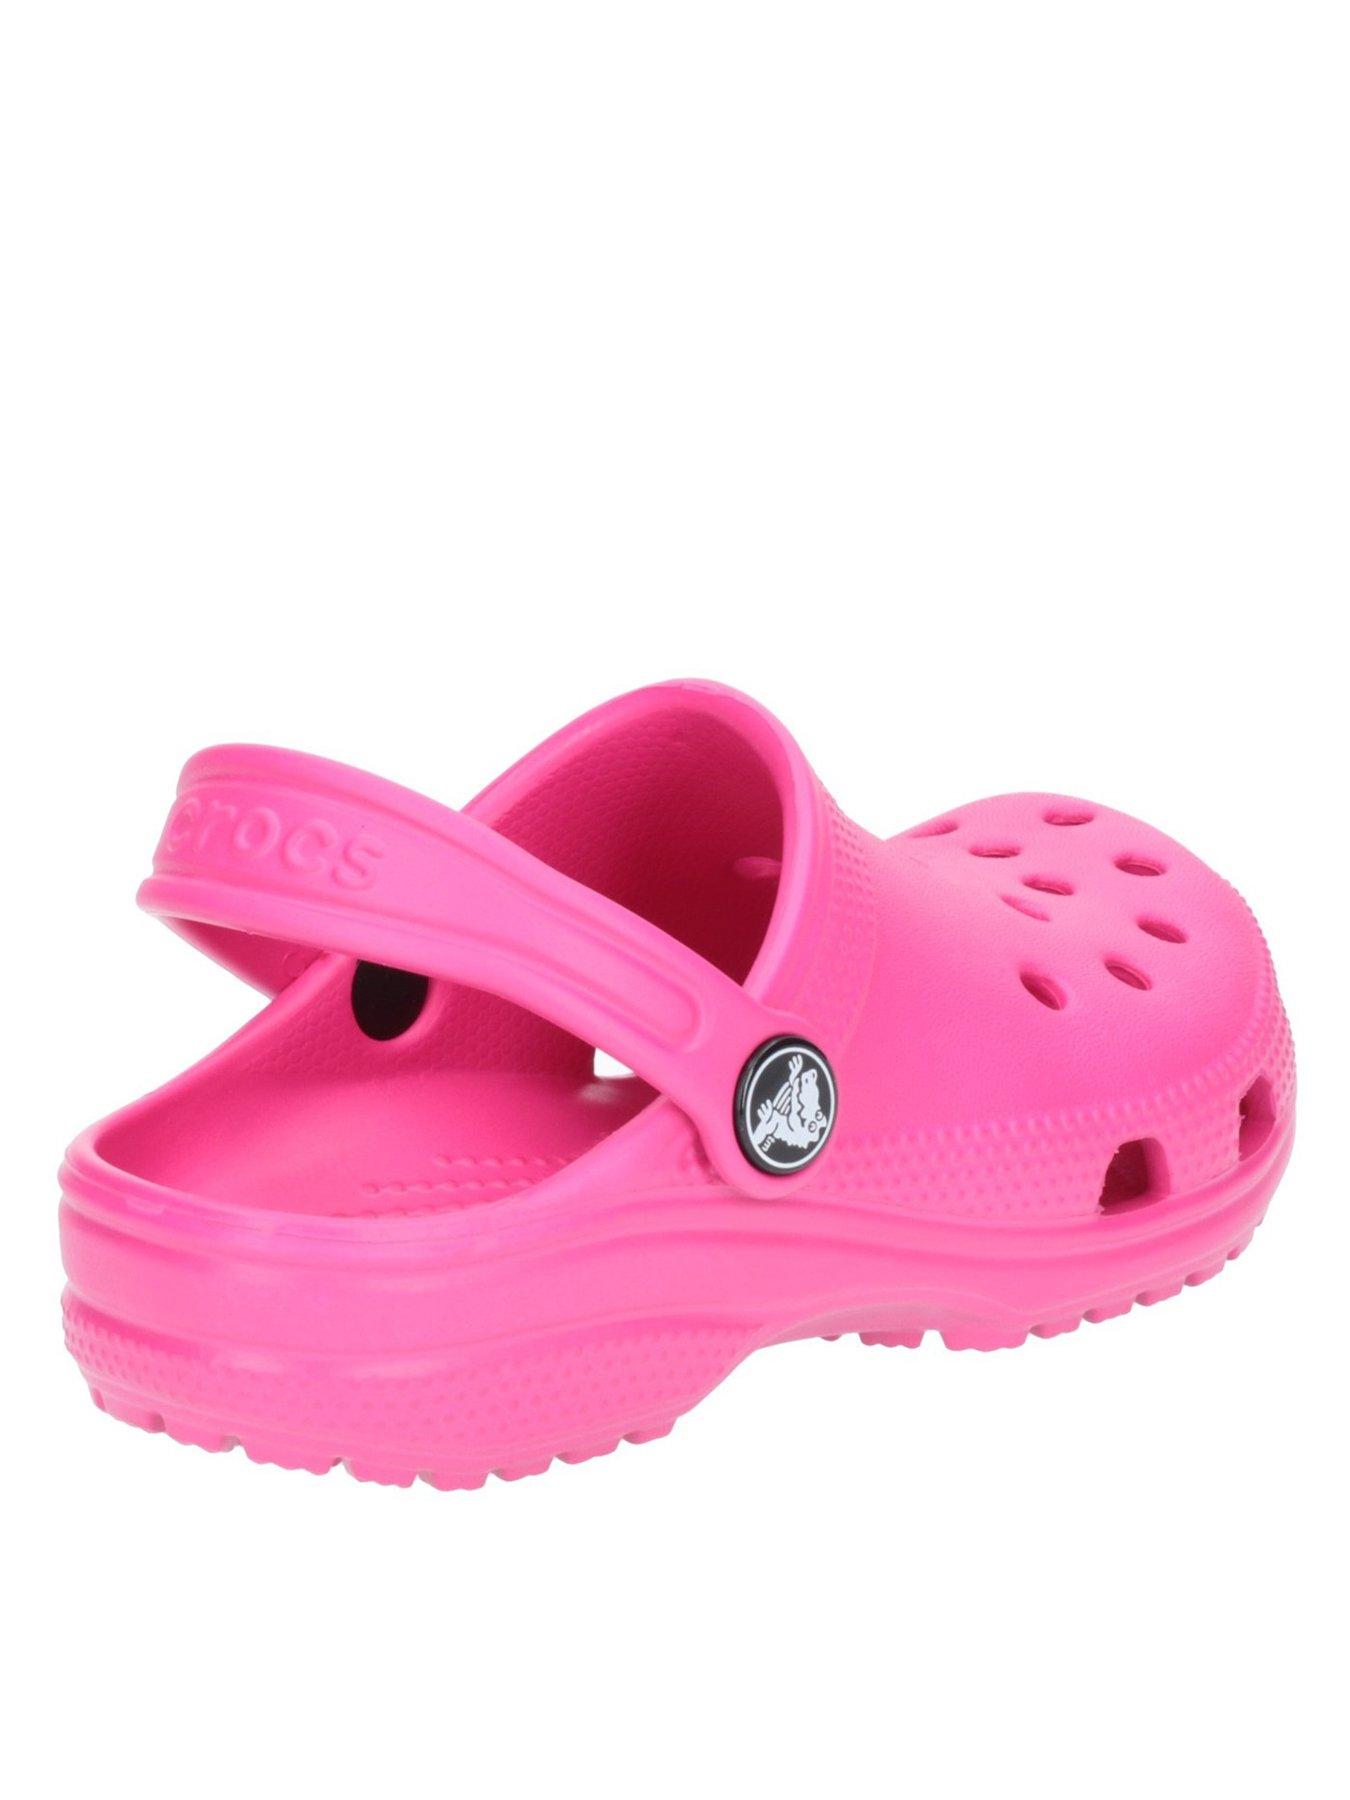 girls size 11 crocs